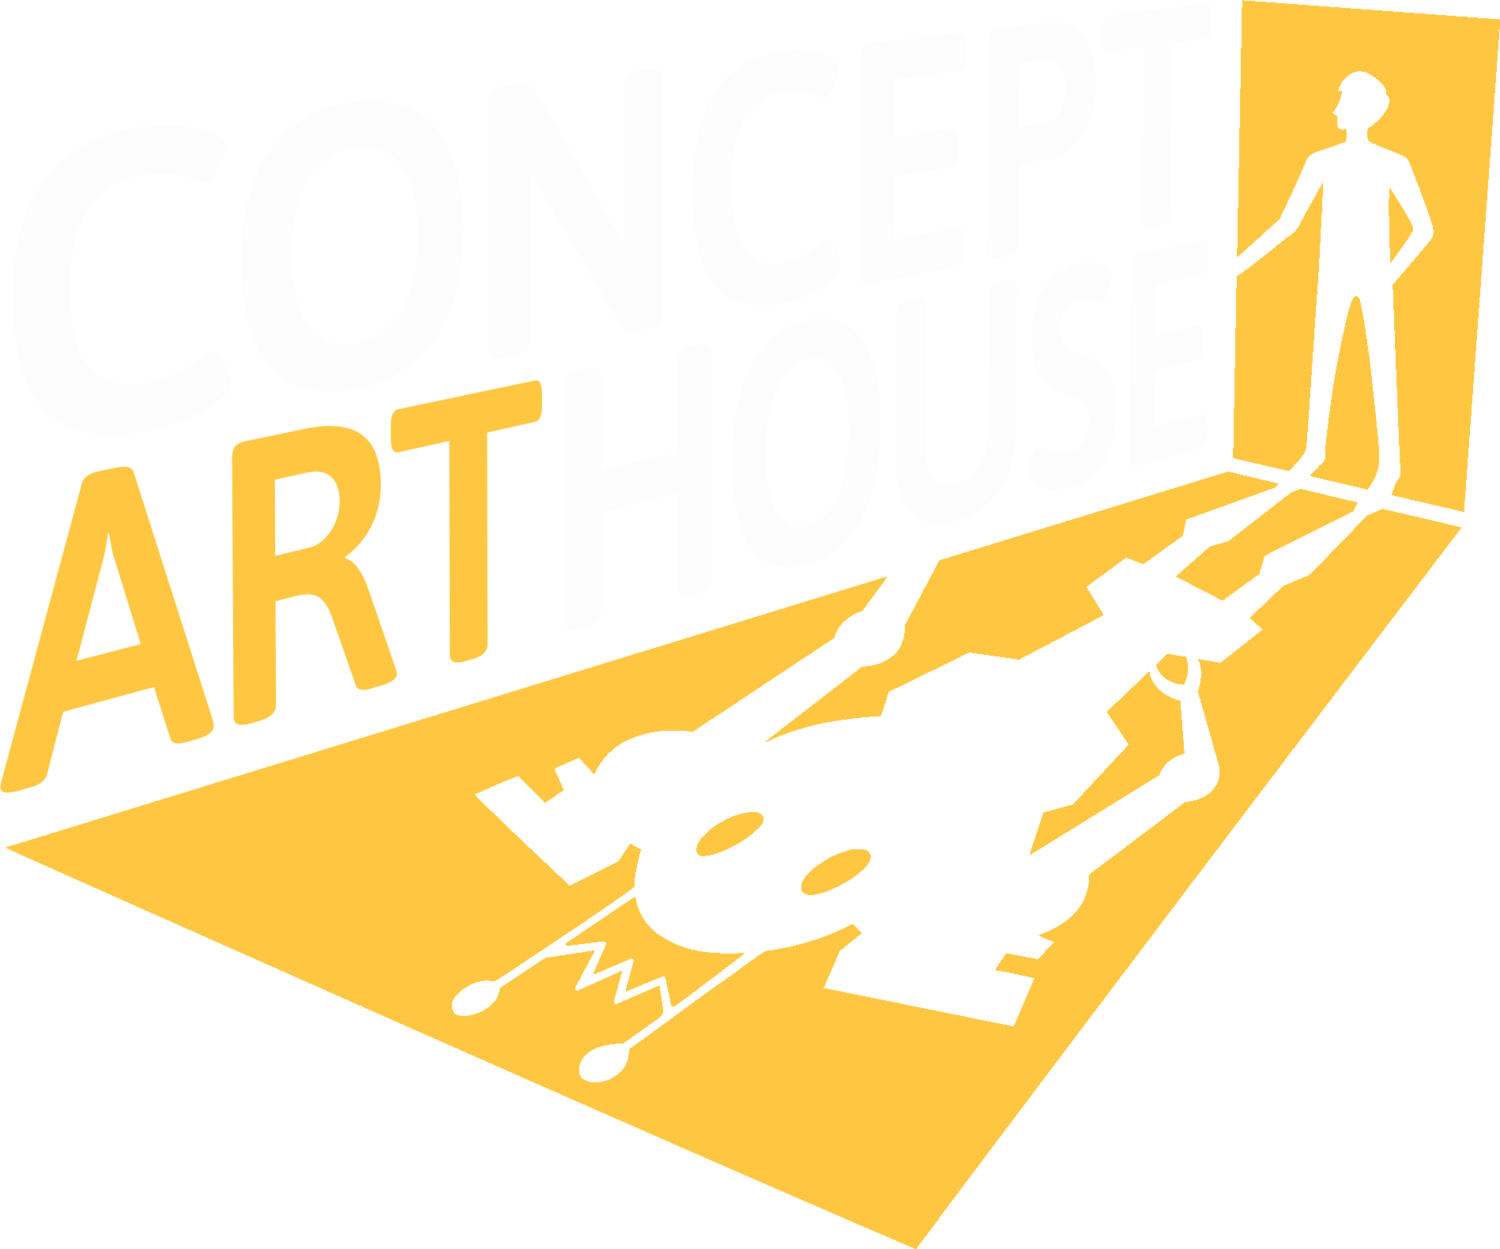 Concept Art House | Game Art Outsourcing